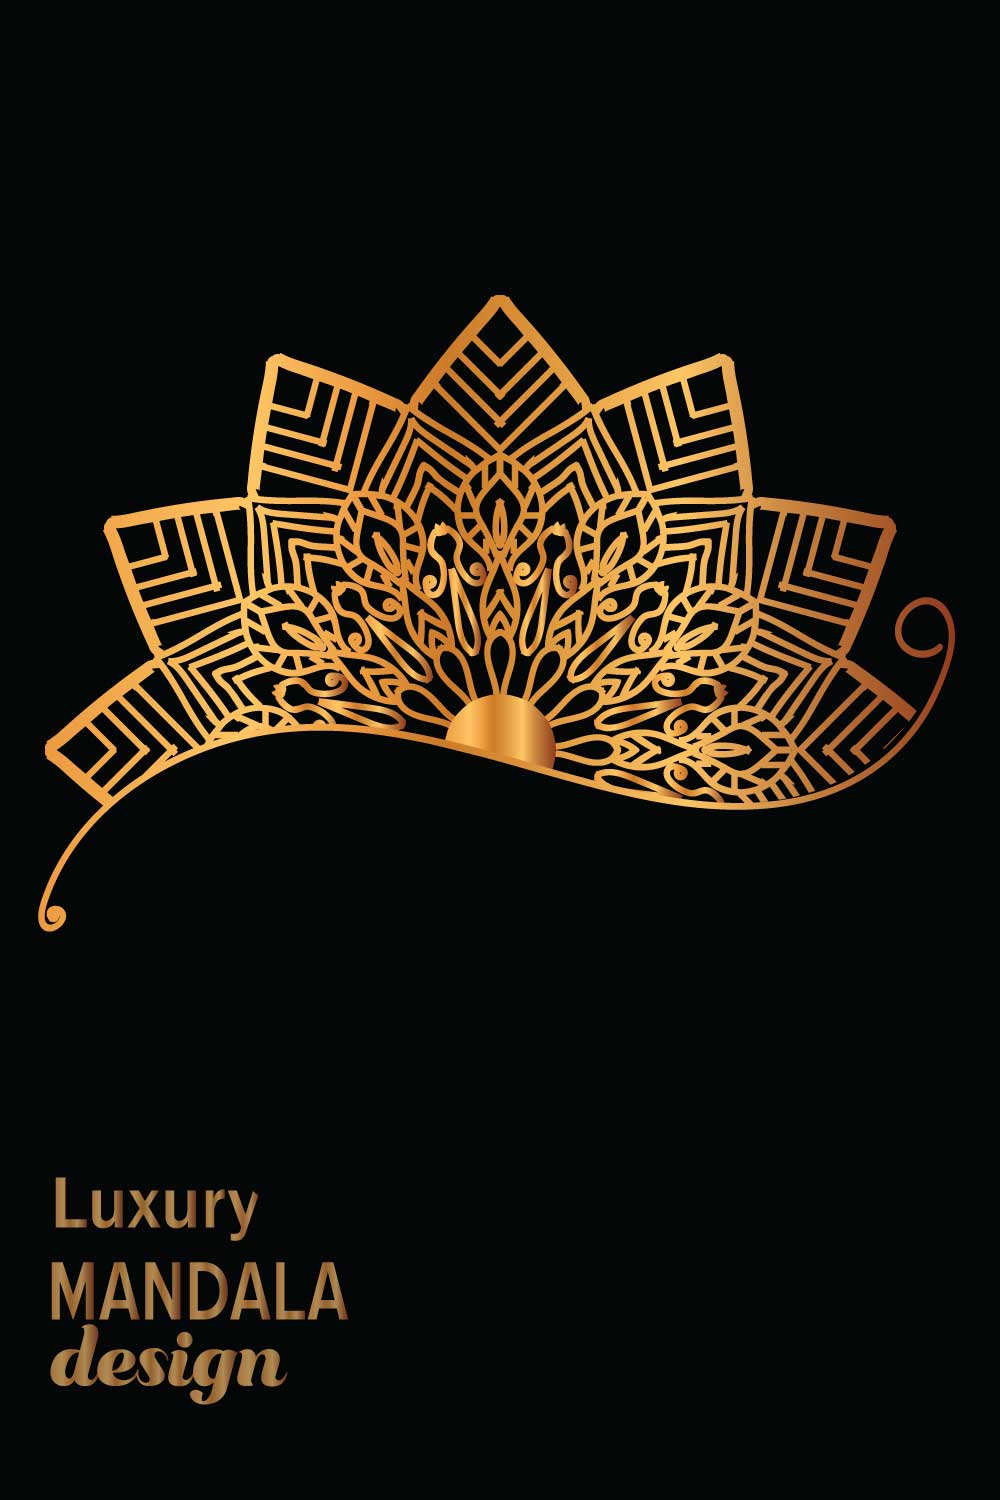 Luxury mandala design pinterest preview image.